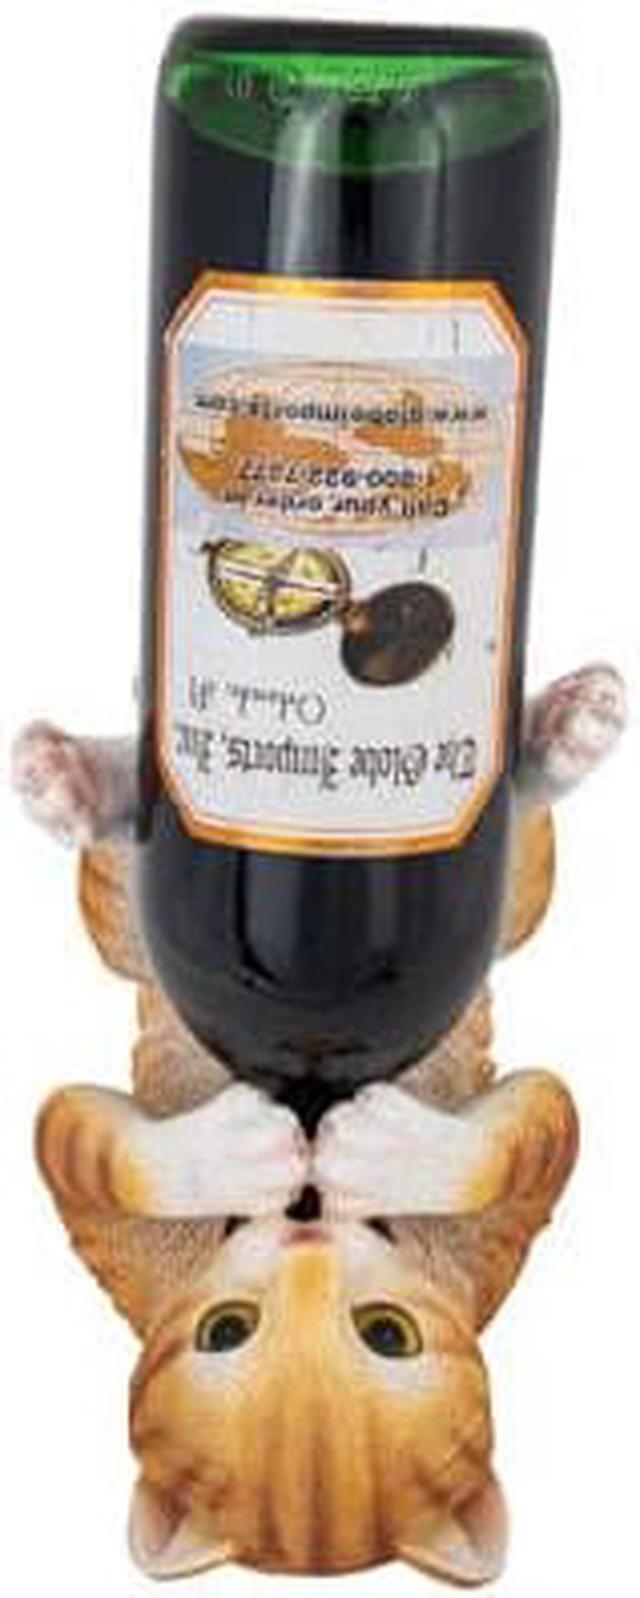 Globe Imports Drinking Orange Tabby Cat Wine Bottle Holder, Decorative Wine Bottle Holder for Cabinet, Cat Mom Wine-bar Accessories, Cat Statues Resin